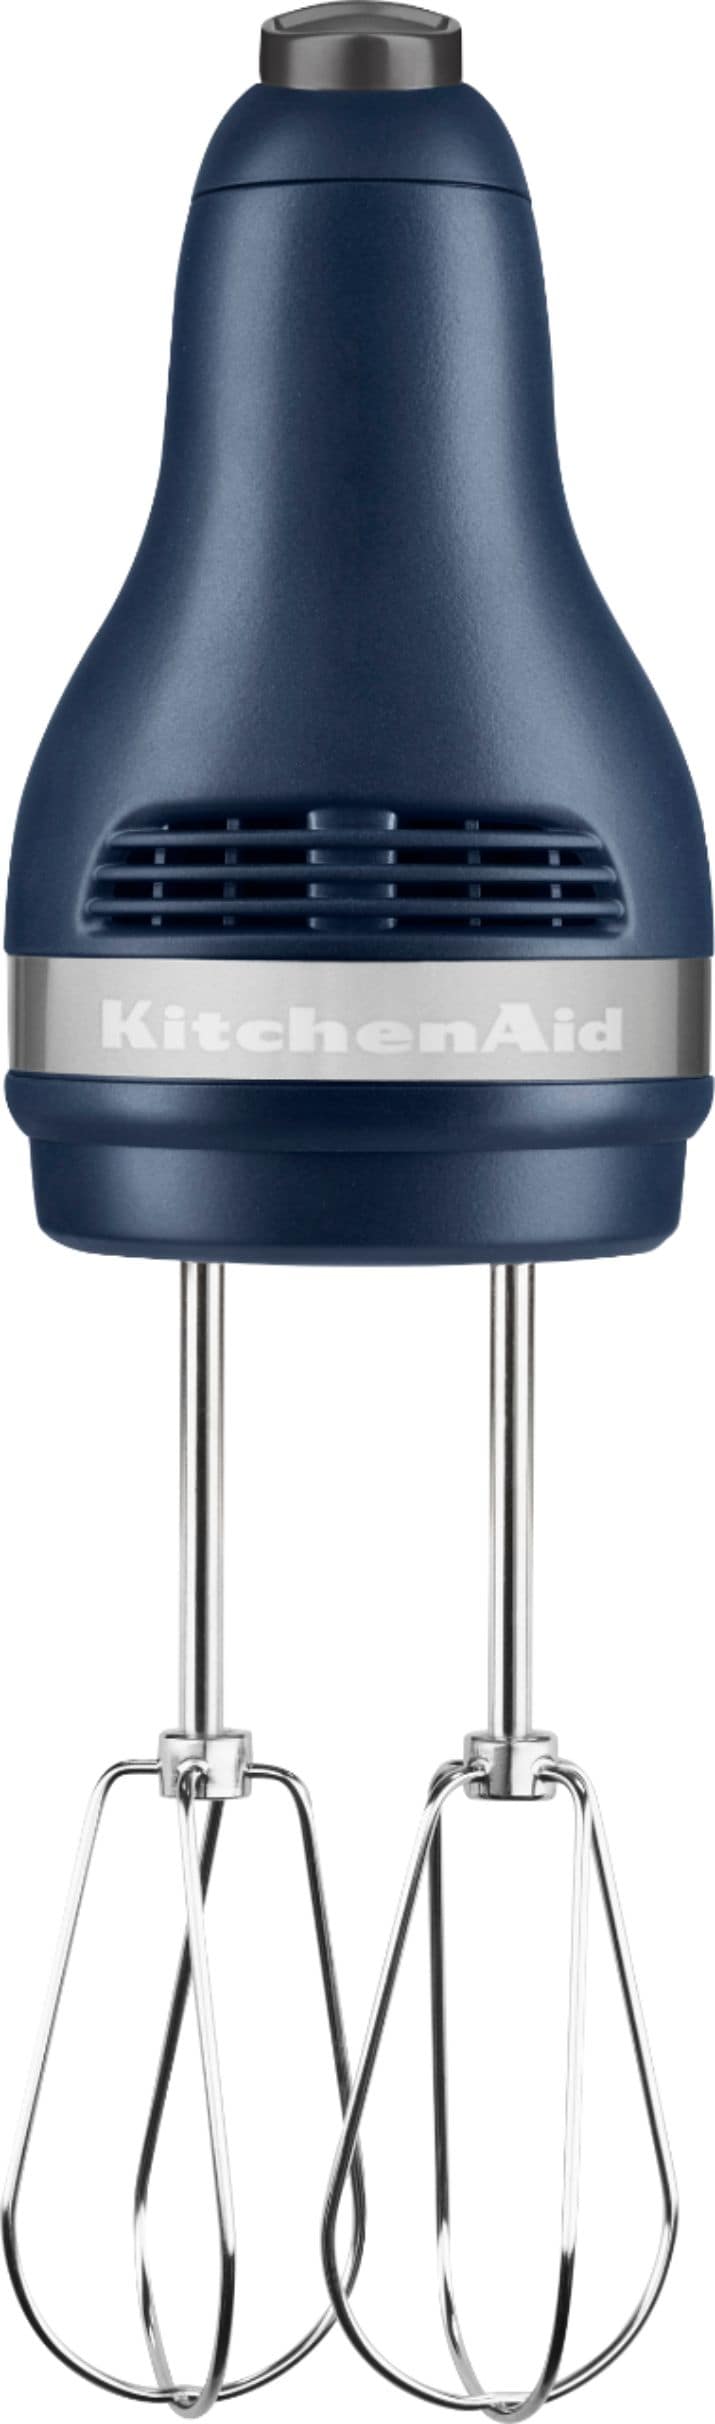 KitchenAid - KHM512IB Ultra Power 5-Speed Hand Mixer - Ink Blue_3